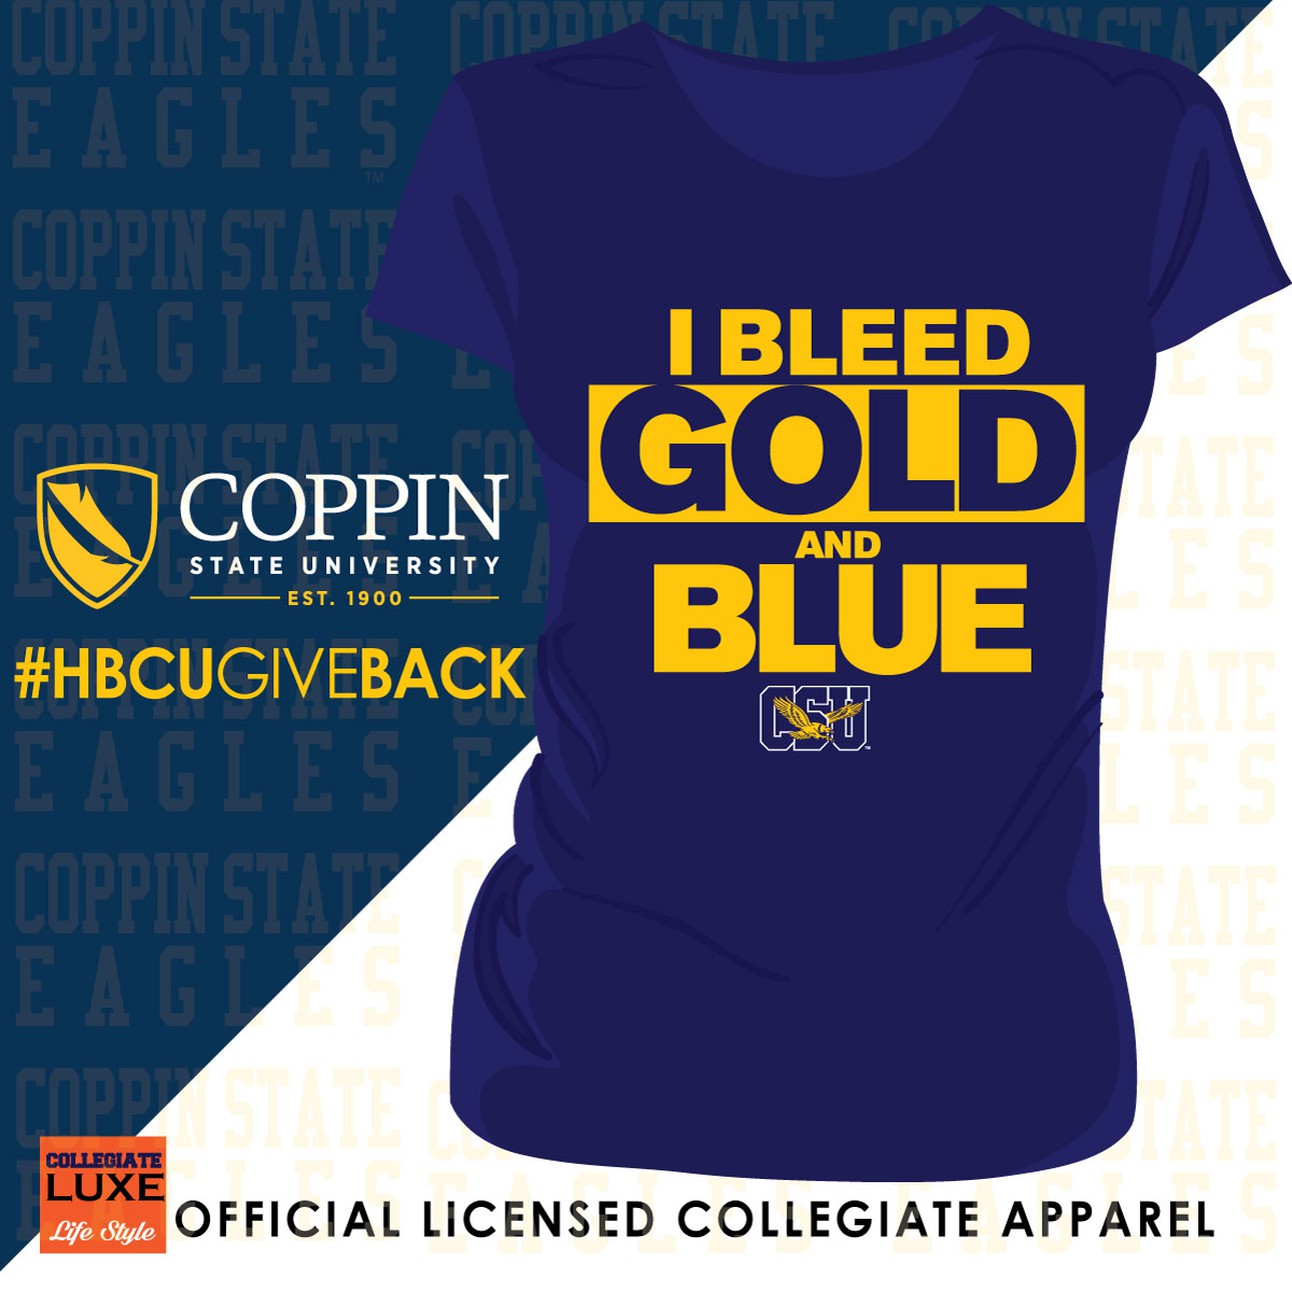 Coppin St. | I BLEED GLOD Navy Ladies Tees